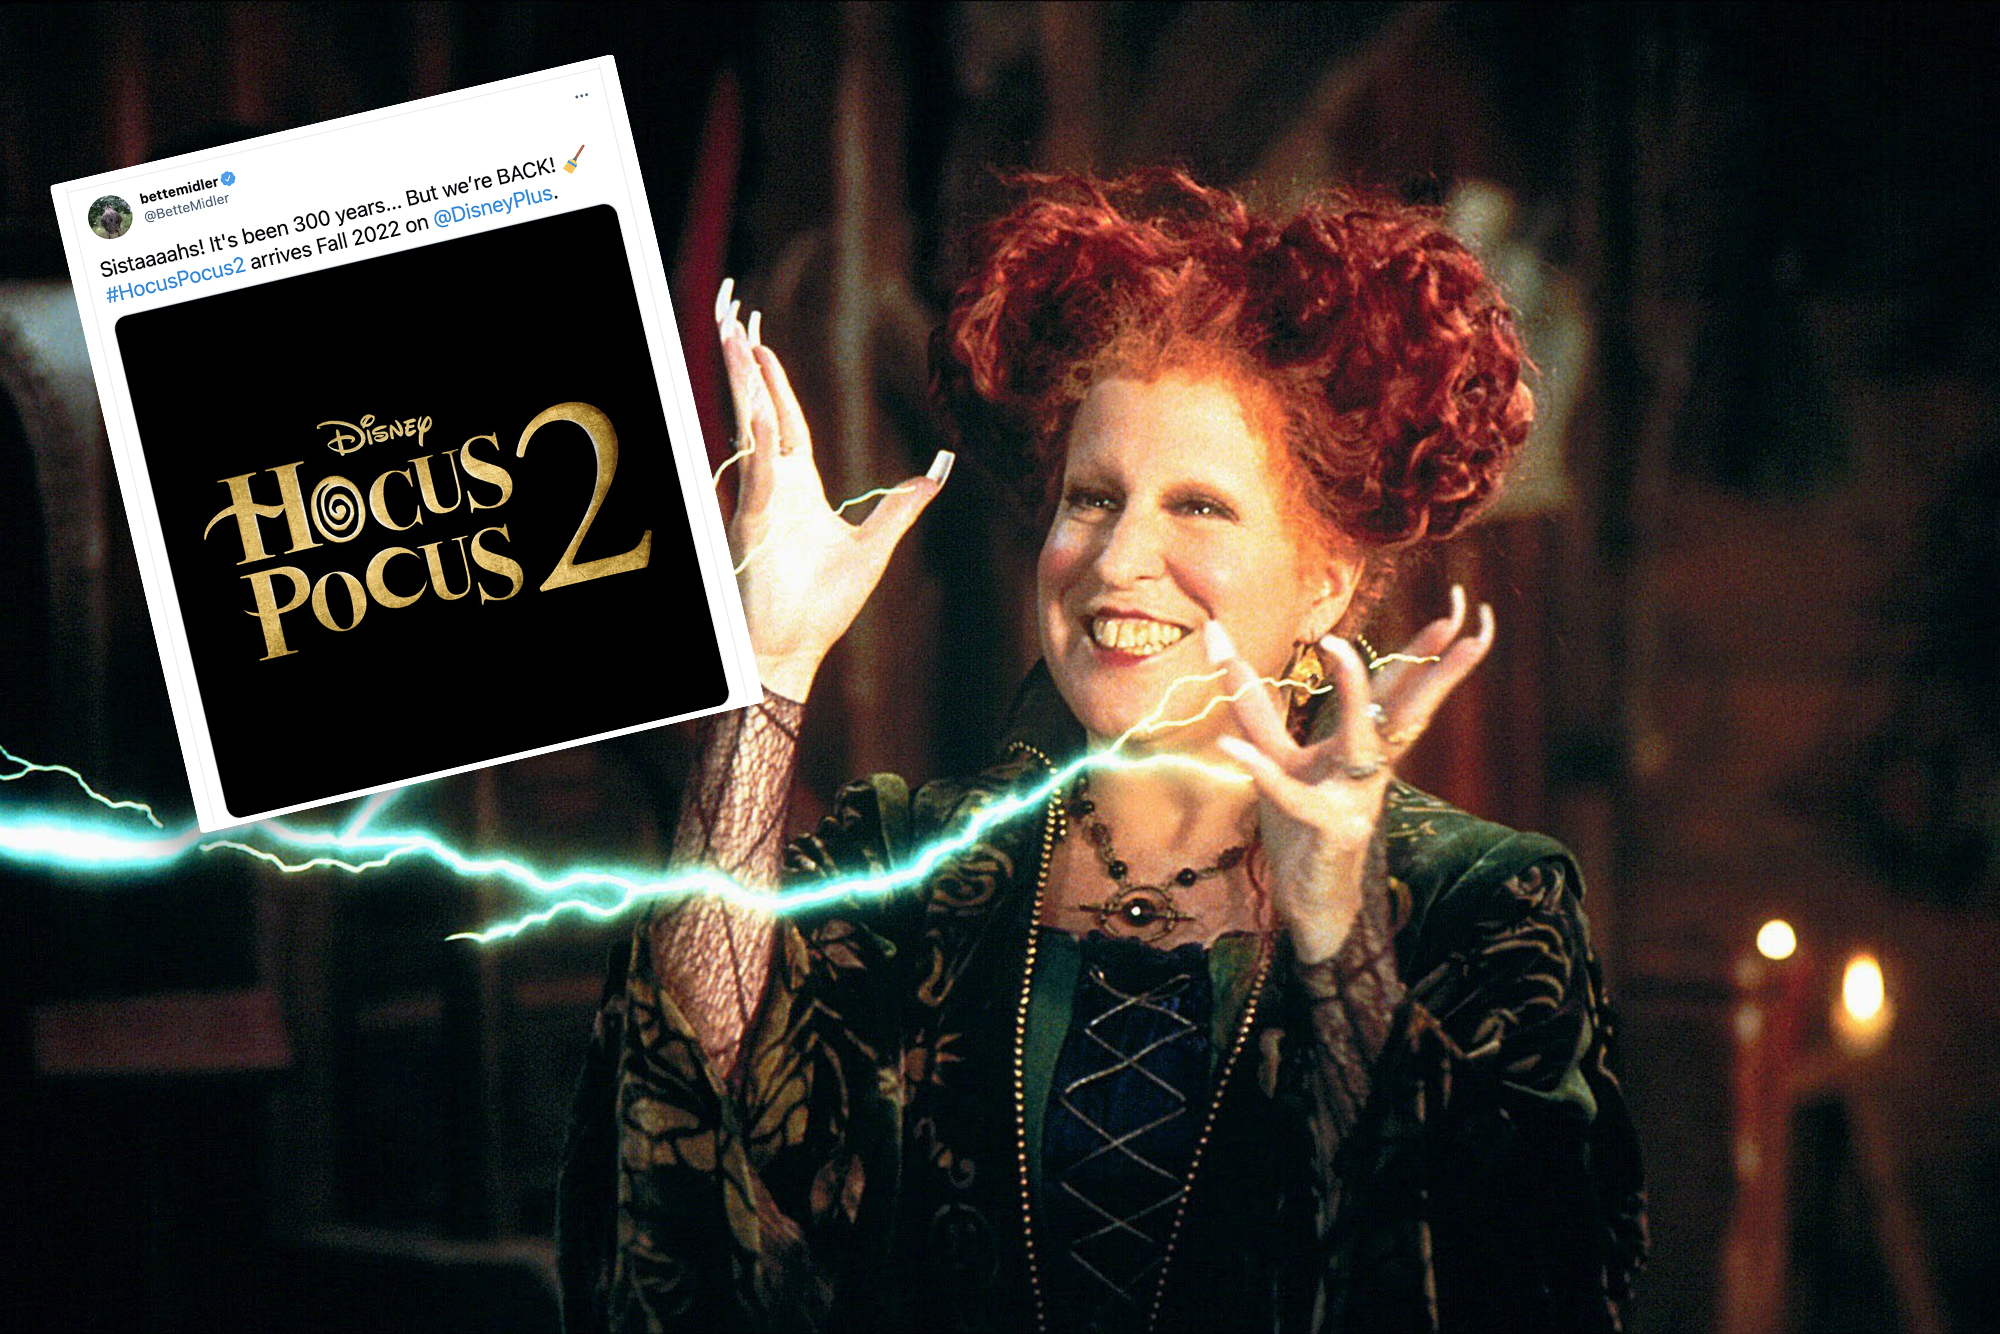 Bette Midler announces date for 'Hocus Pocus 2' on Disney+